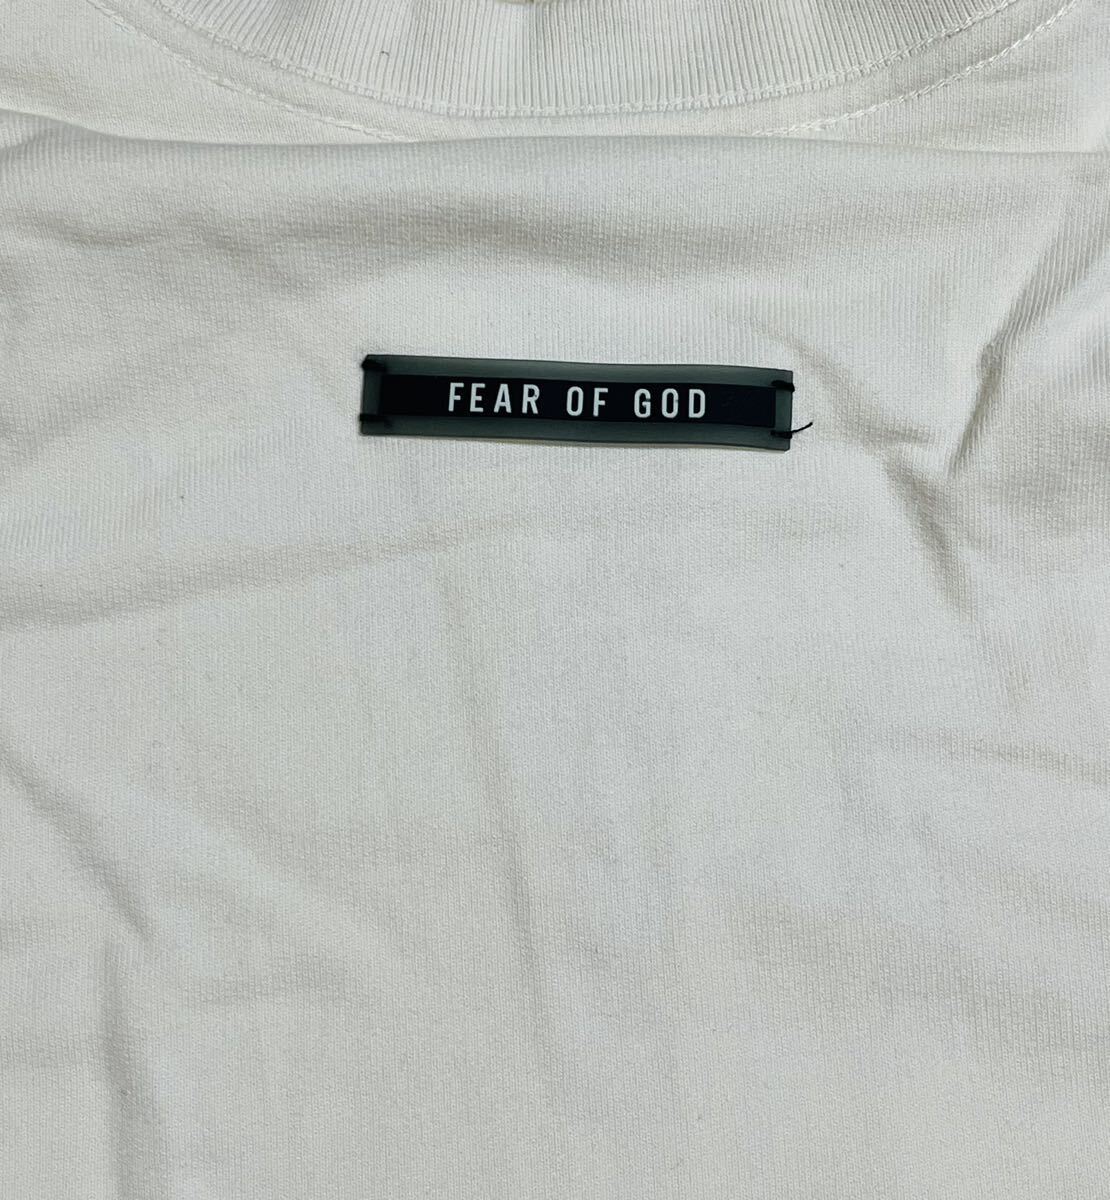 【1円〜】 FEAR OF GOD ヘンリー Tシャツ XL / フィアオブゴッド Jerry Lorenzo着用 balenciaga saint mxxxxxx essentialsの画像3